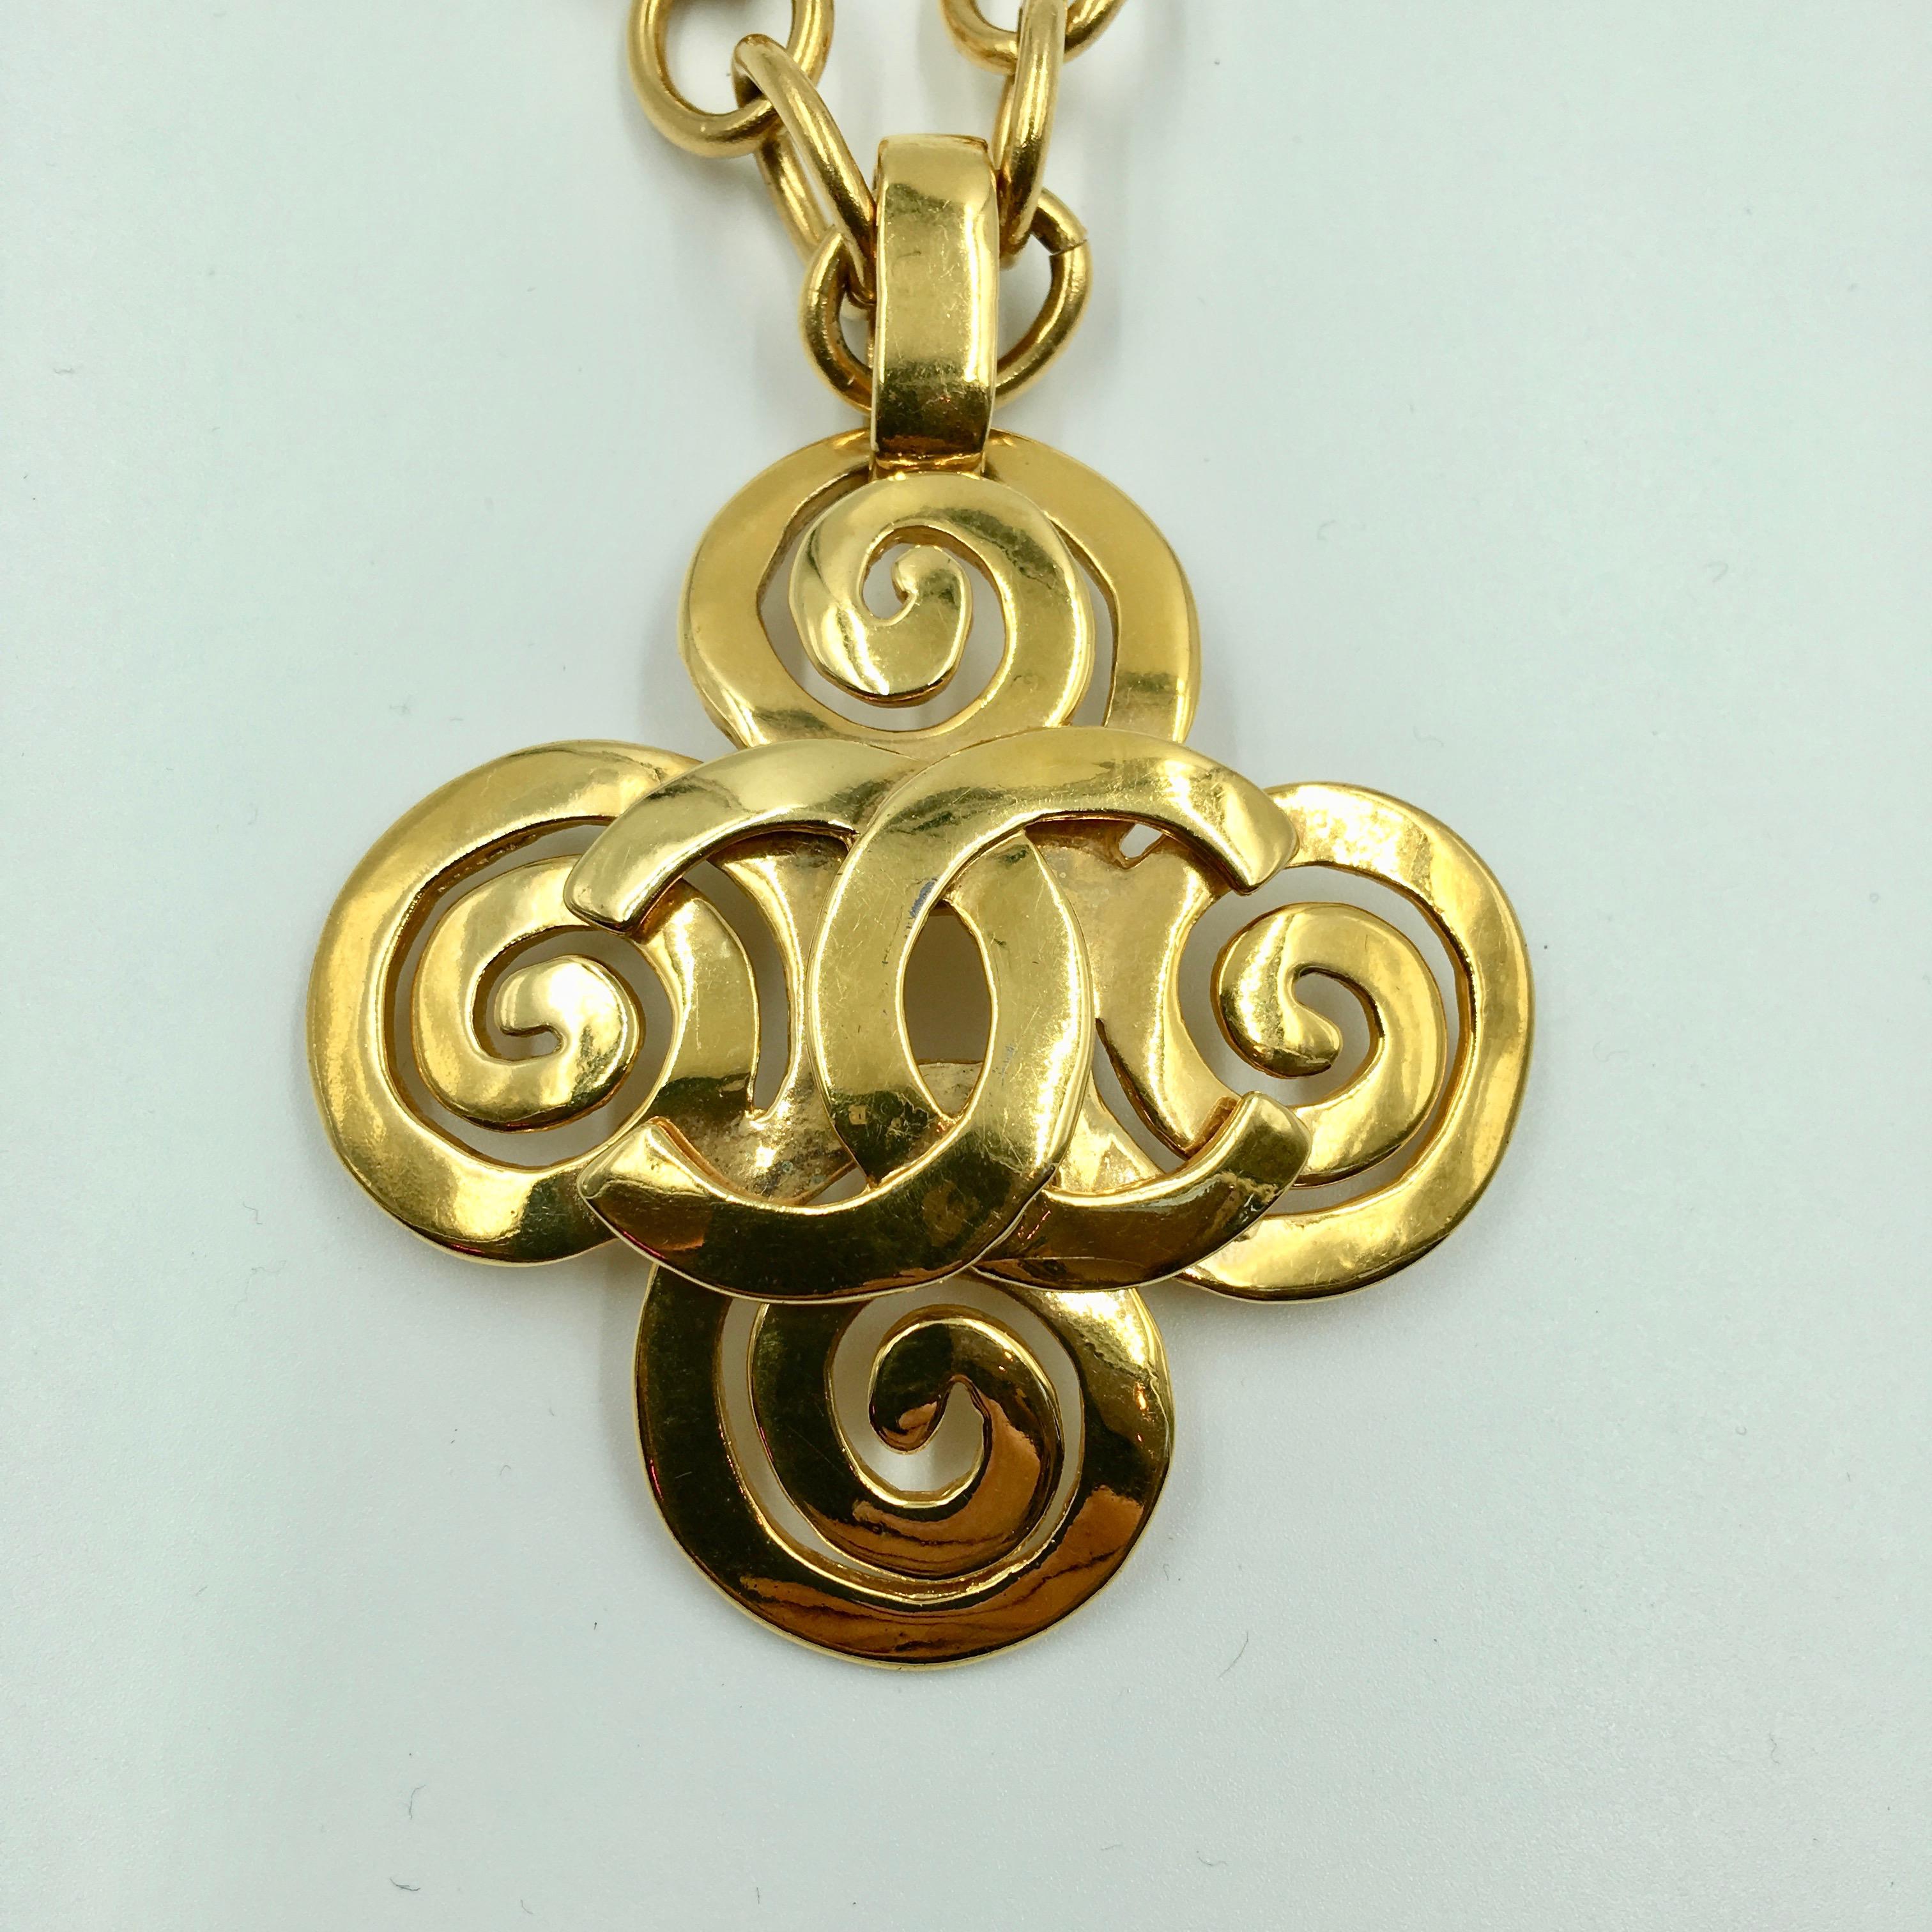 Contemporain Chanel, collier croix tourbillonnante avec logo CC, couleur or en vente